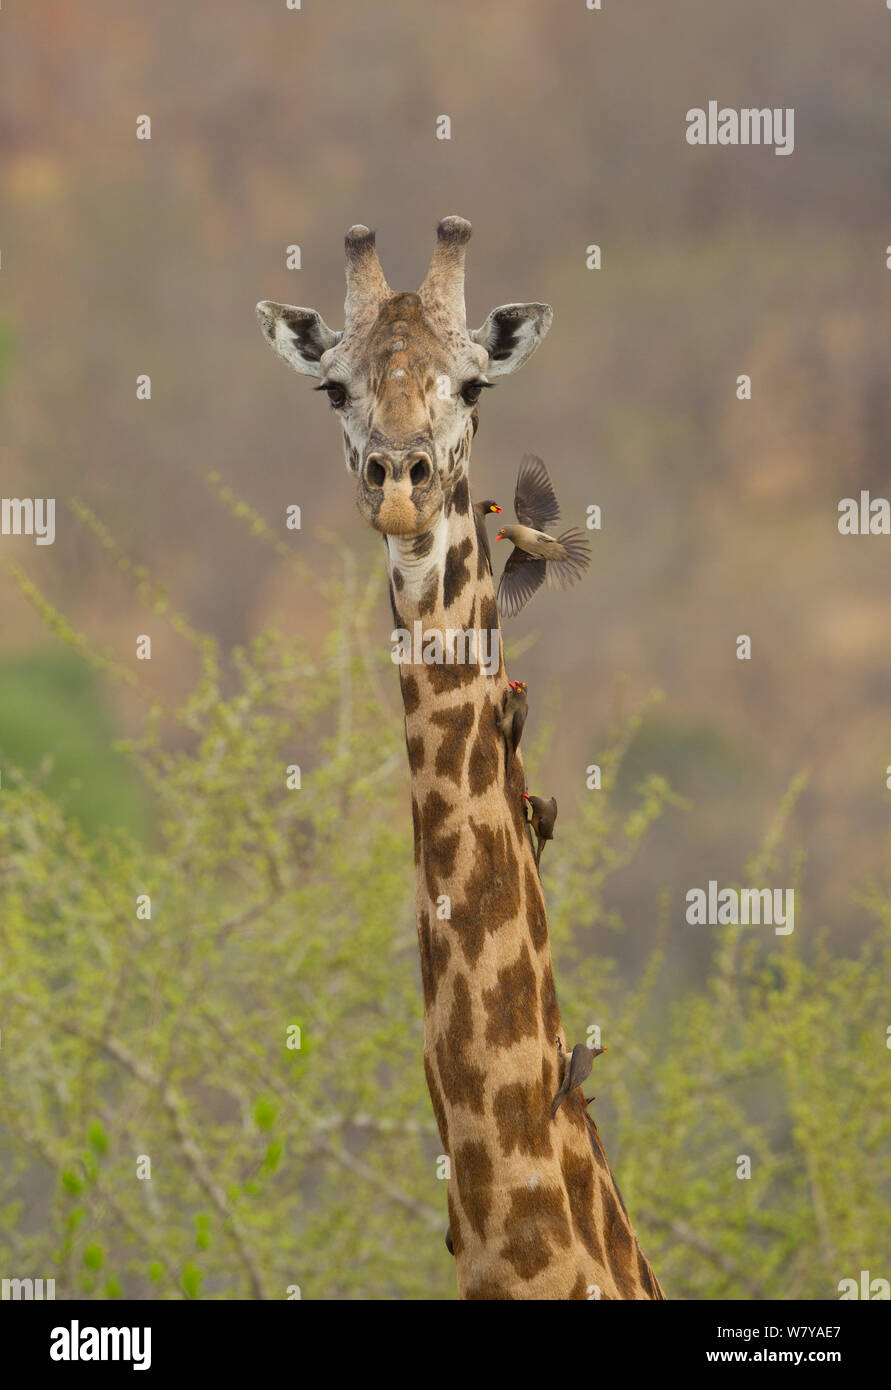 Masai jirafa (Giraffa camelopardalis tippelskirchi) macho con rojo-facturados (Buphagus erythrorhynchus) y de pico amarillo (oxpeckers Buphagus africanus) en el cuello, el Parque nacional Ruaha, Tanzania. Foto de stock